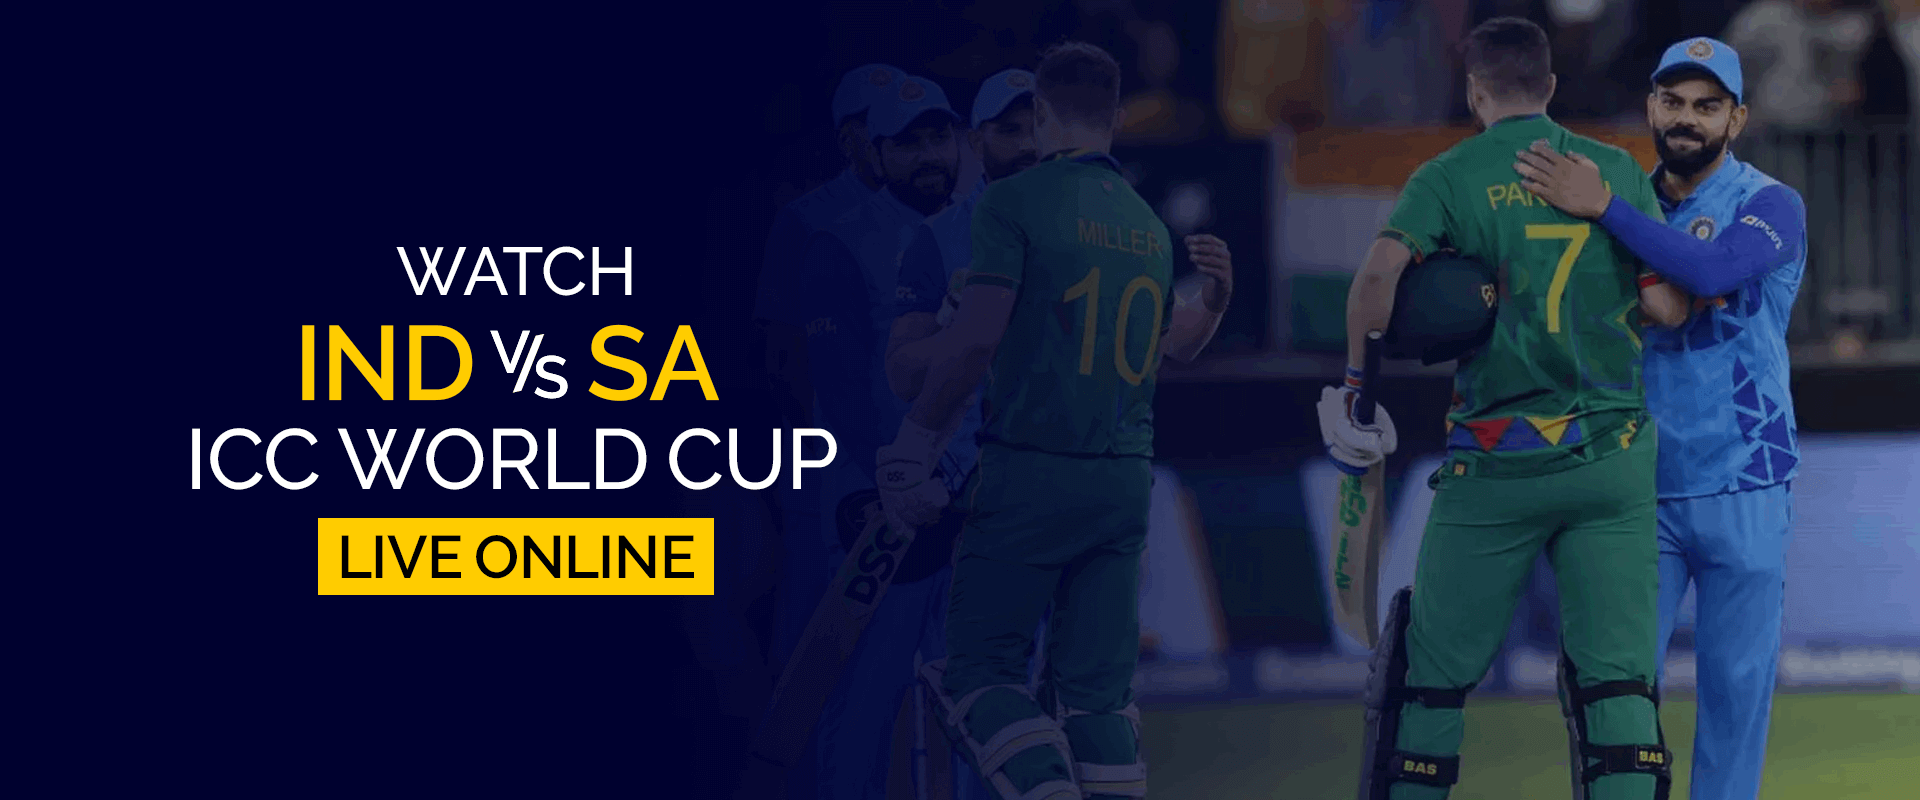 Assistir Índia x África do Sul ICC World Cup ao vivo online